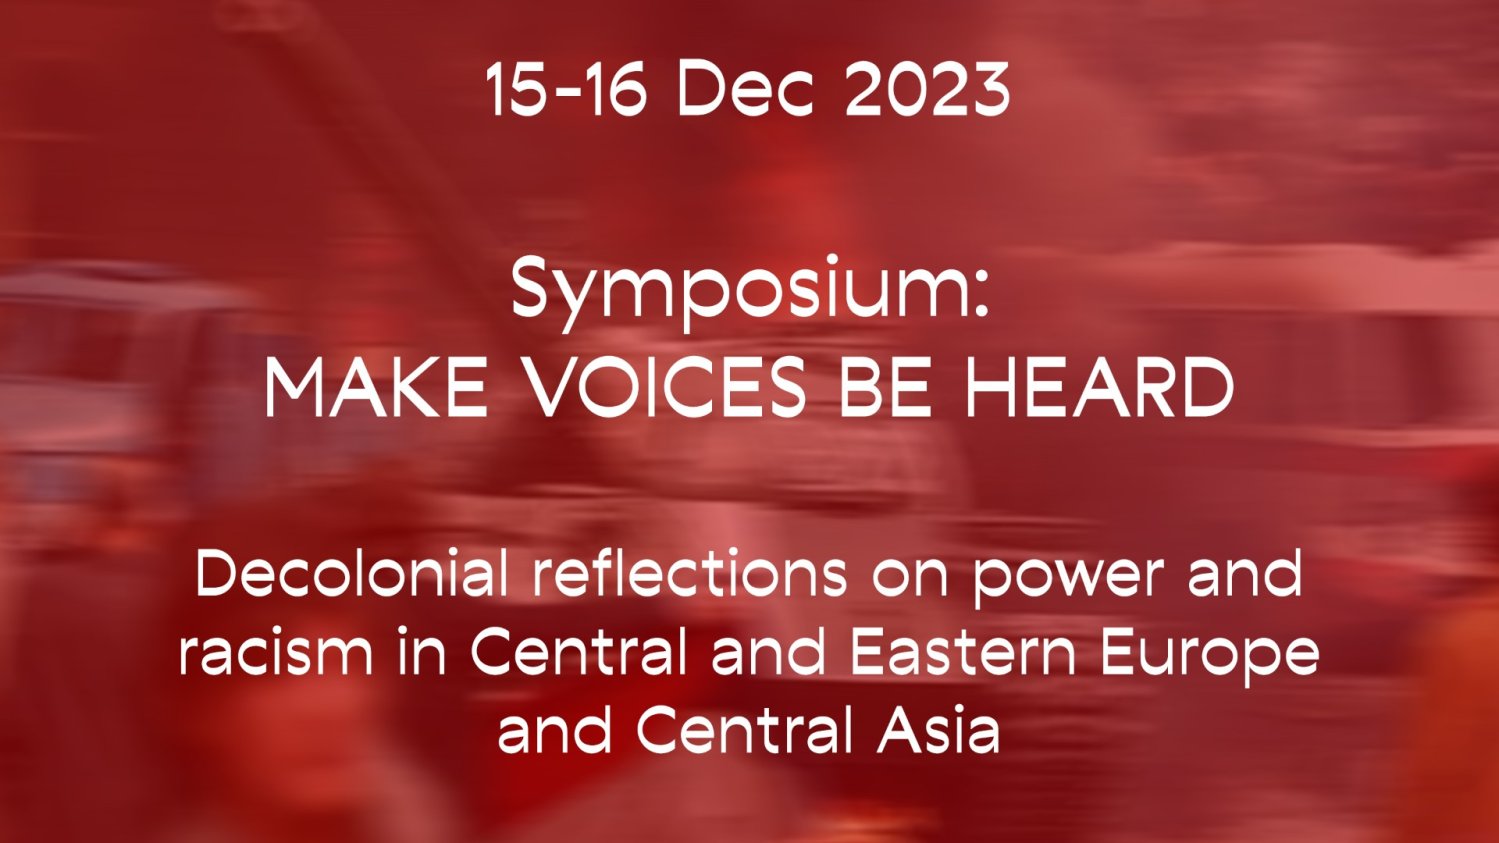 Symposium: make voices be heard